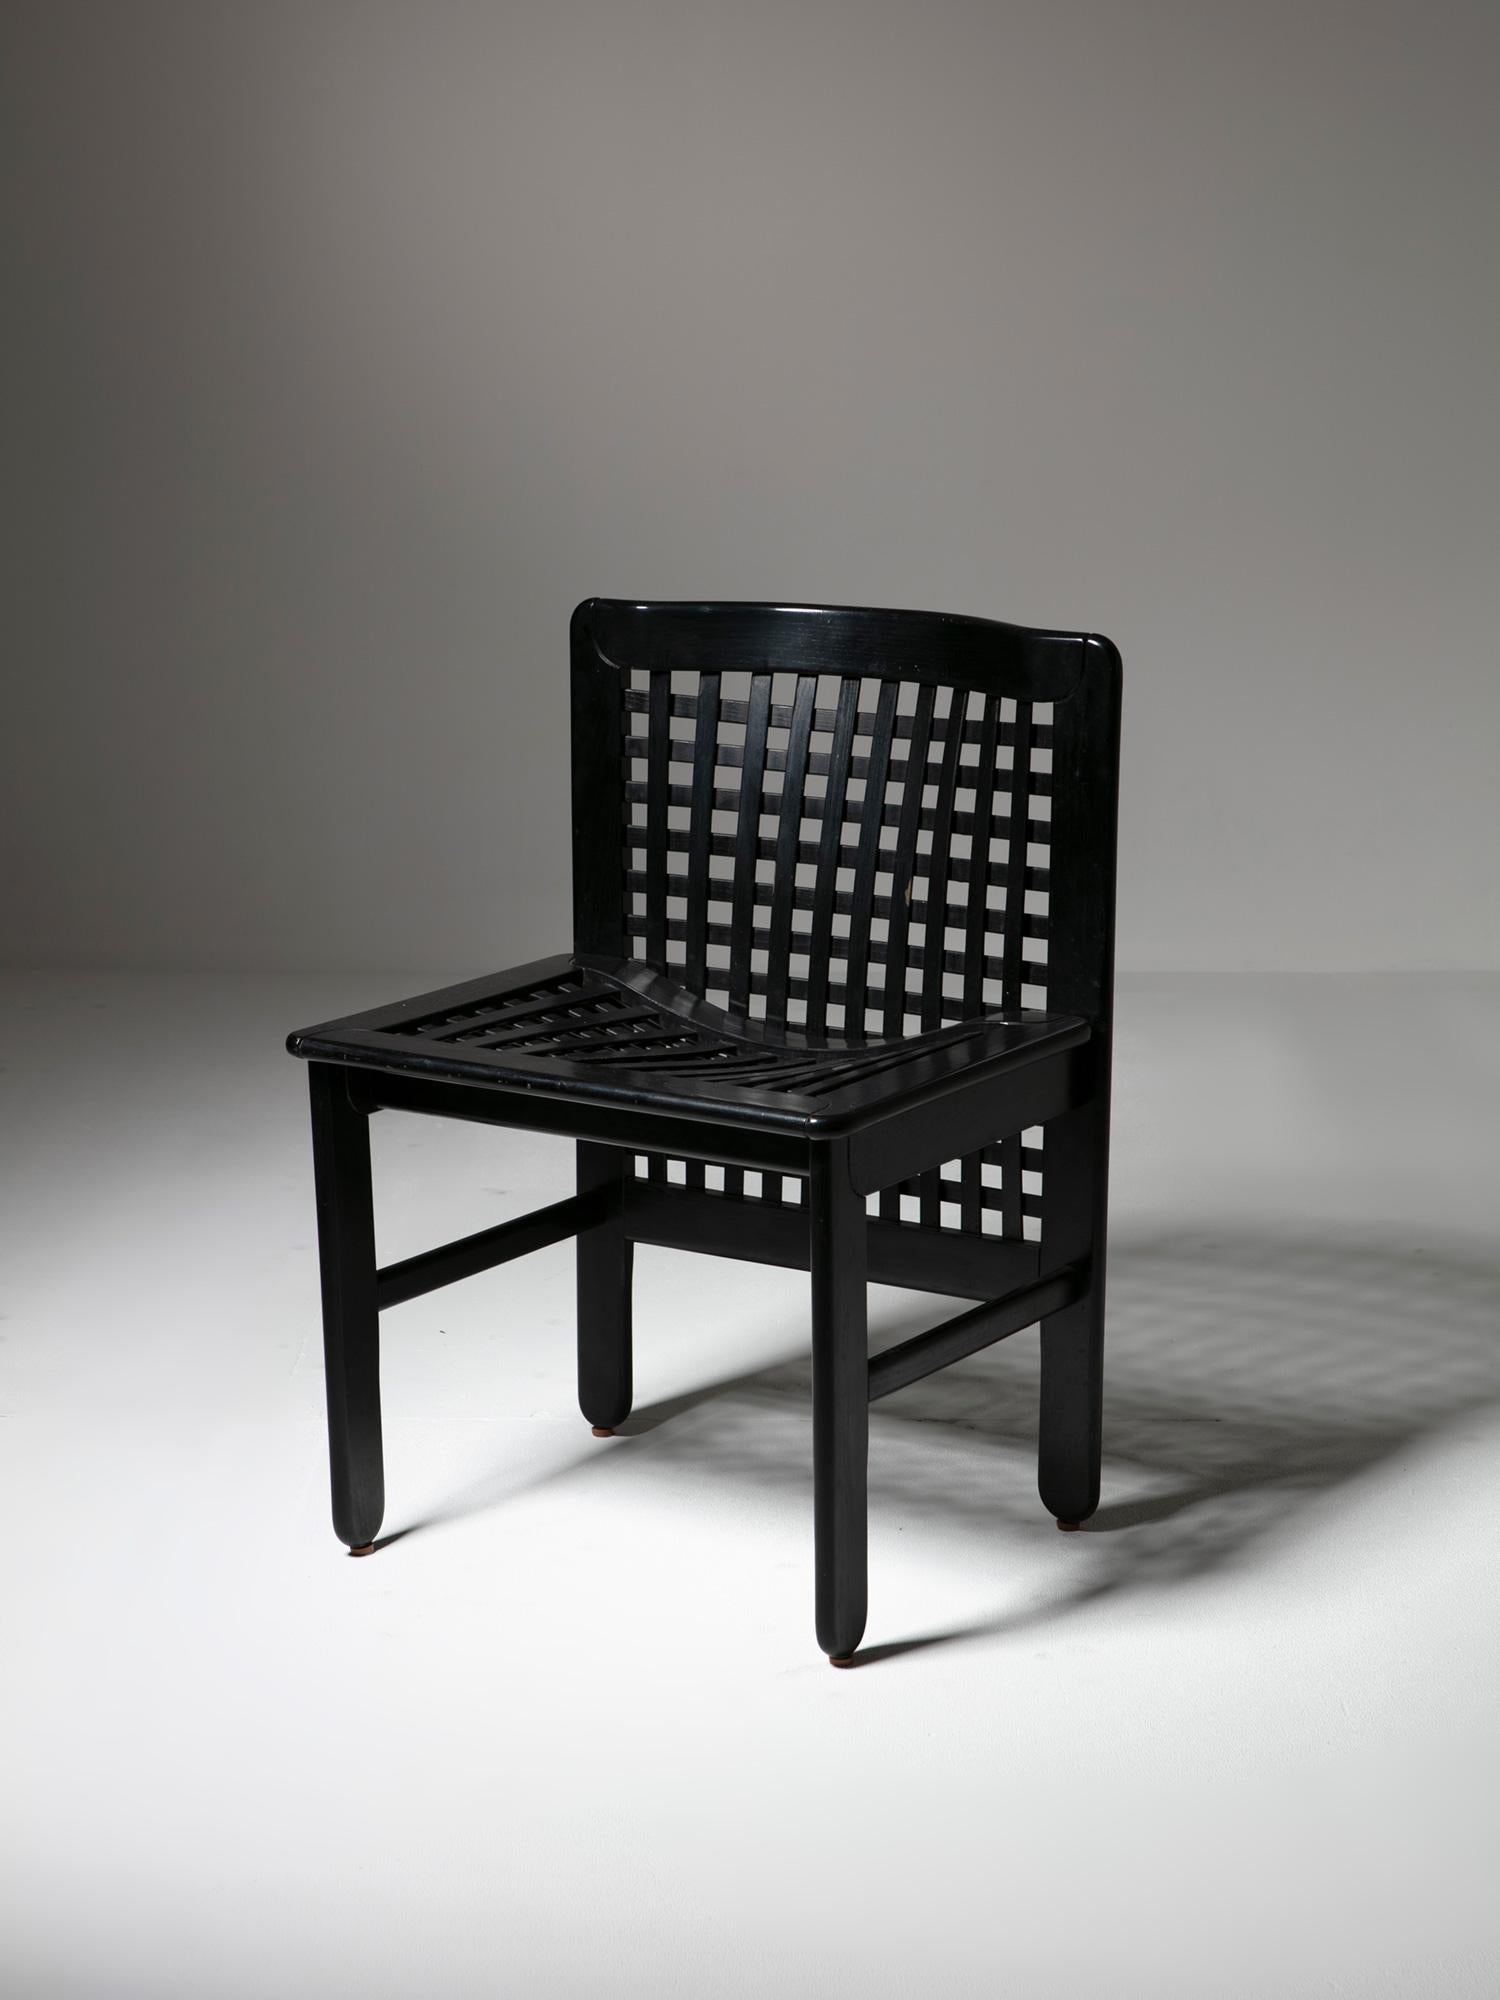 Set of seven Transenna chairs by Titina Ammannati and Giampiero Vitelli for Pozzi and Verga.
Sturdy seating with wood plot backrest.